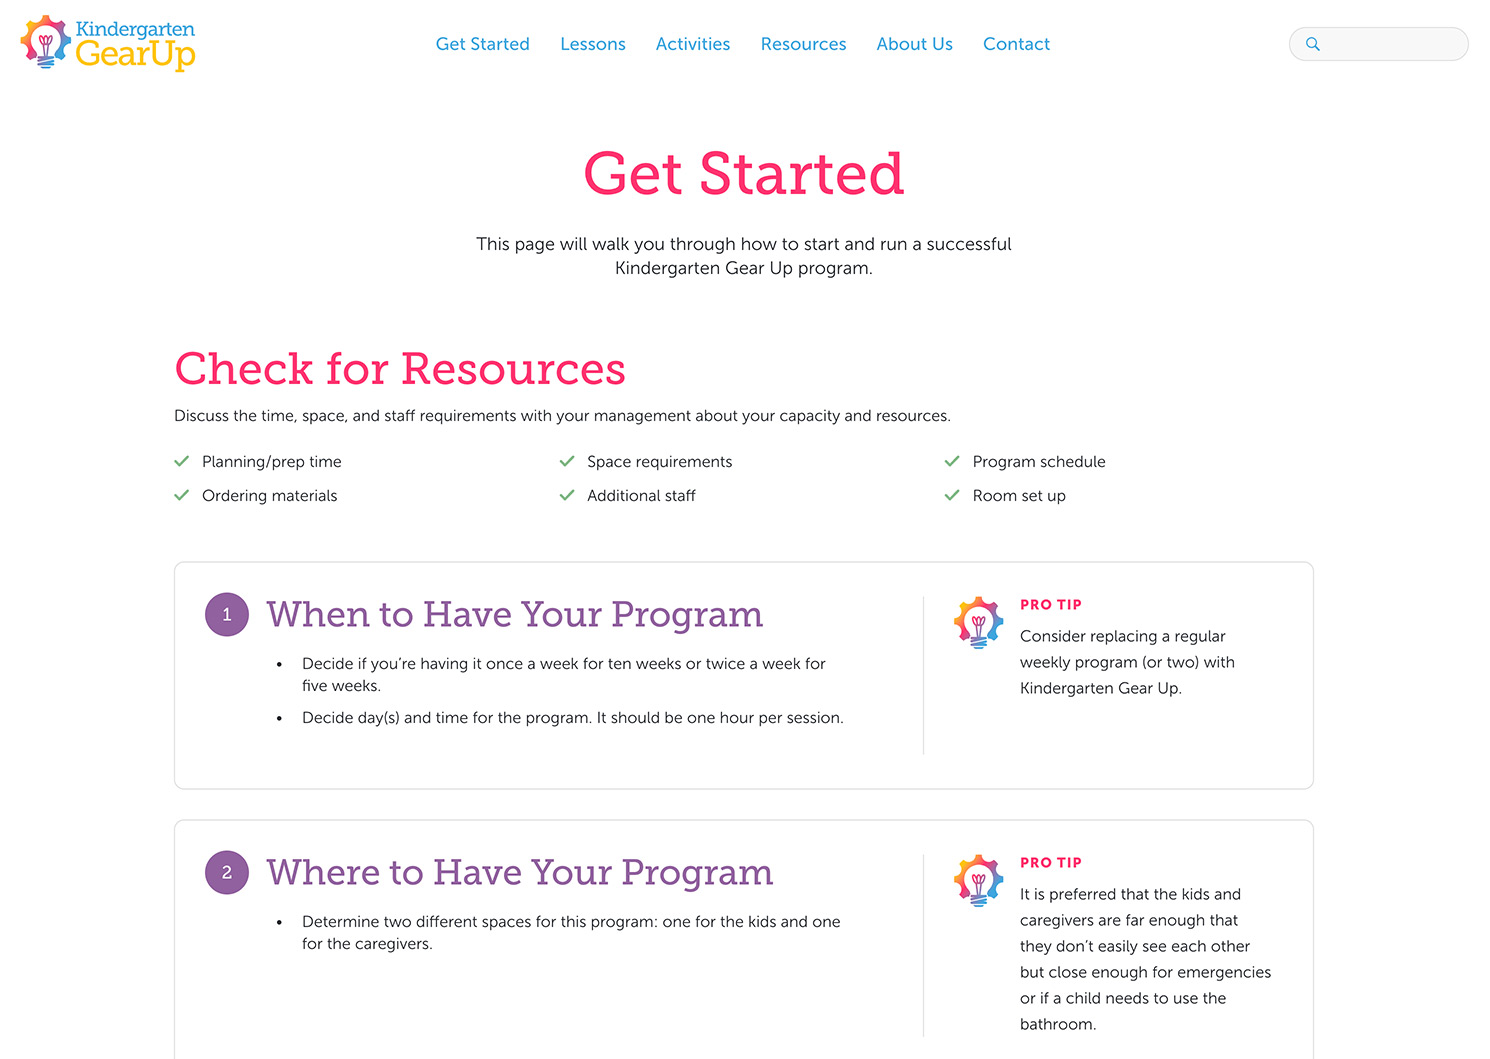 "Get Started" page on the Kindergarten Gear Up website